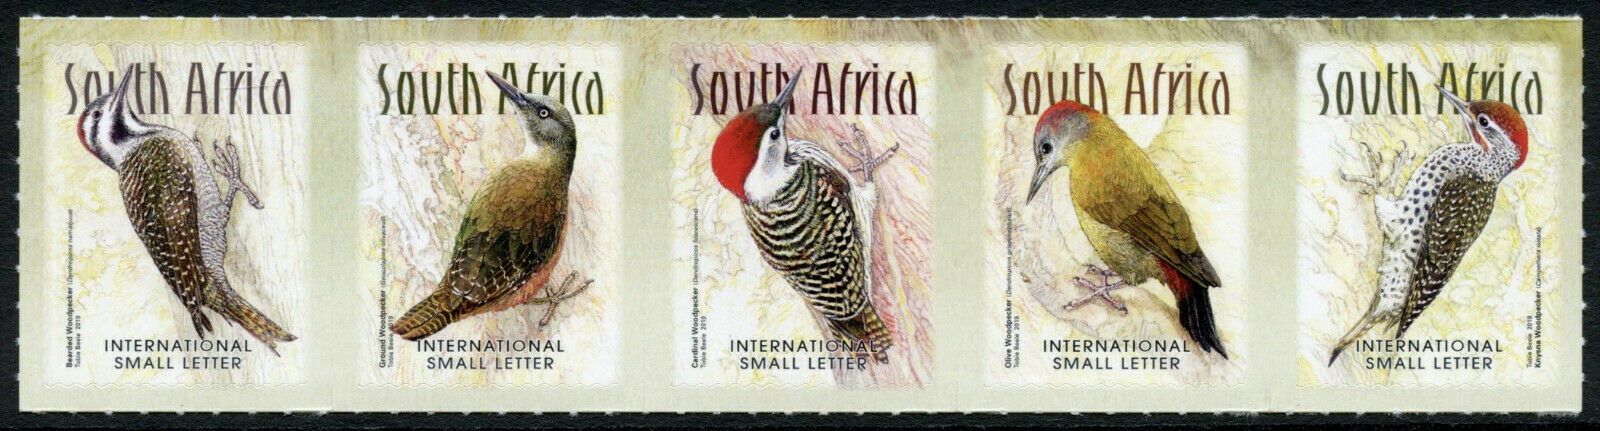 South Africa Birds Stamps 2020 MNH Woodpeckers Knysna Woodpecker 5v S/A Strip